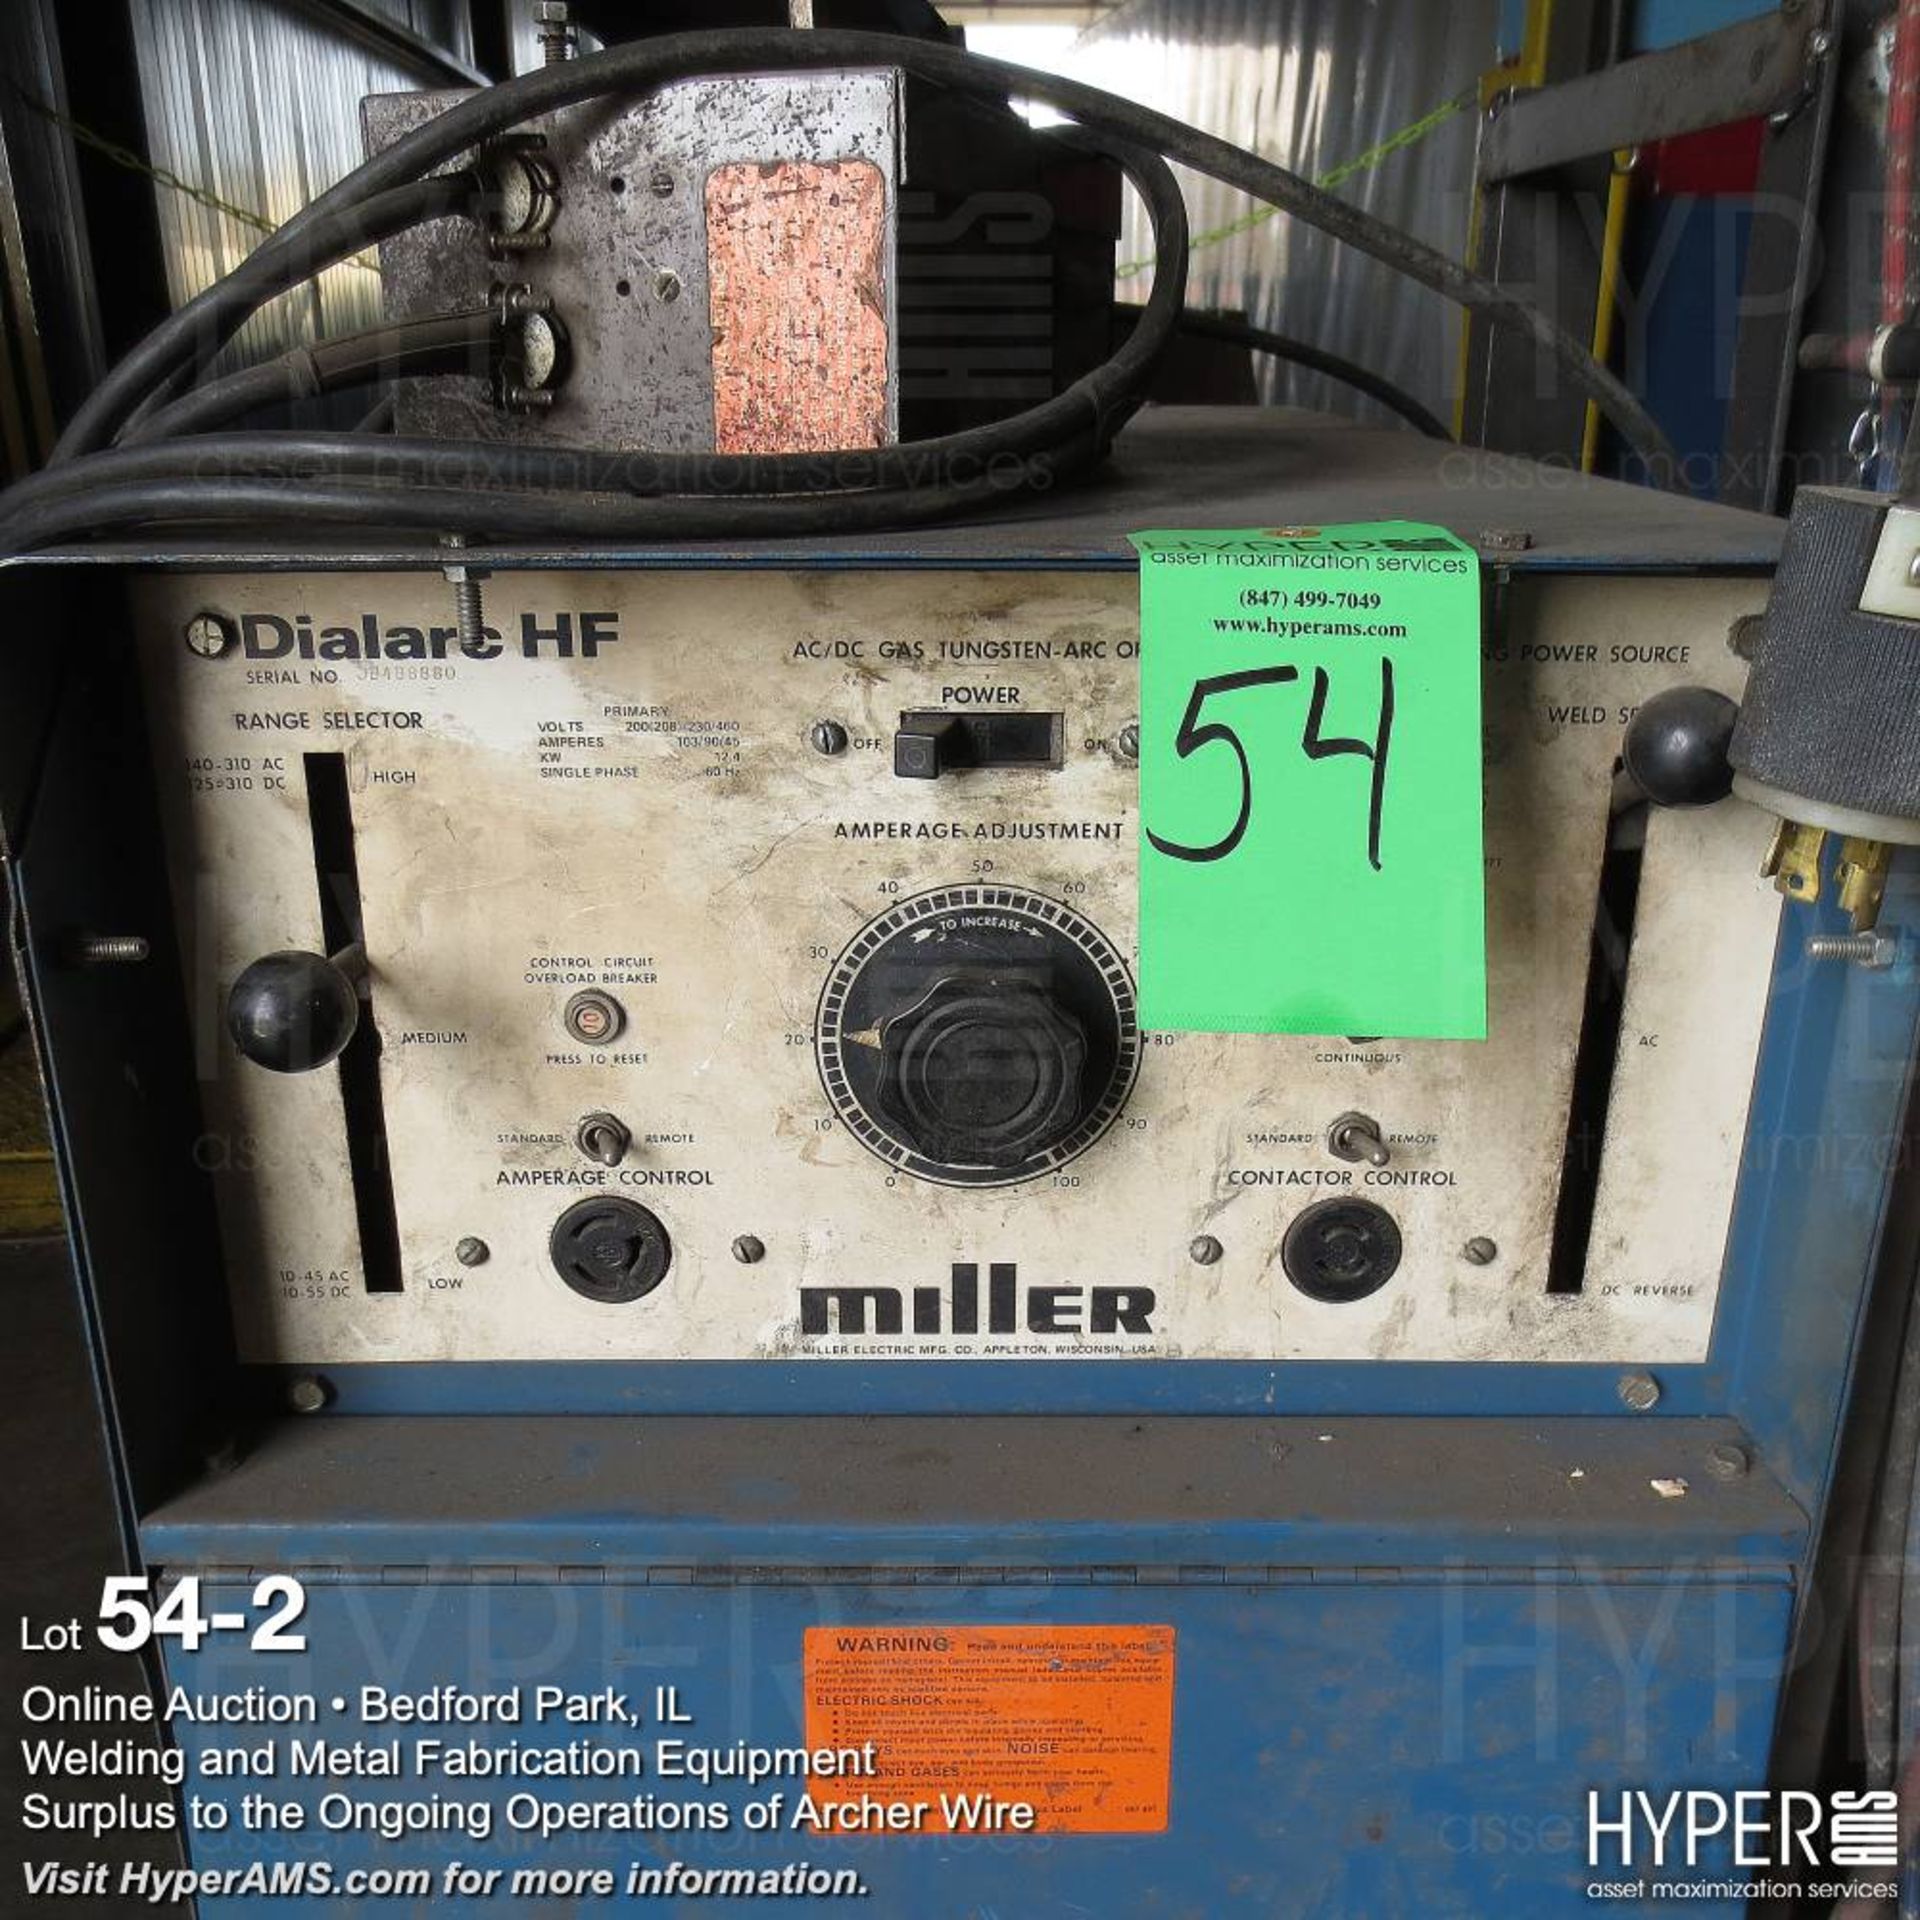 Miller Dialarc HF welder s/n JB488880 - Image 2 of 4